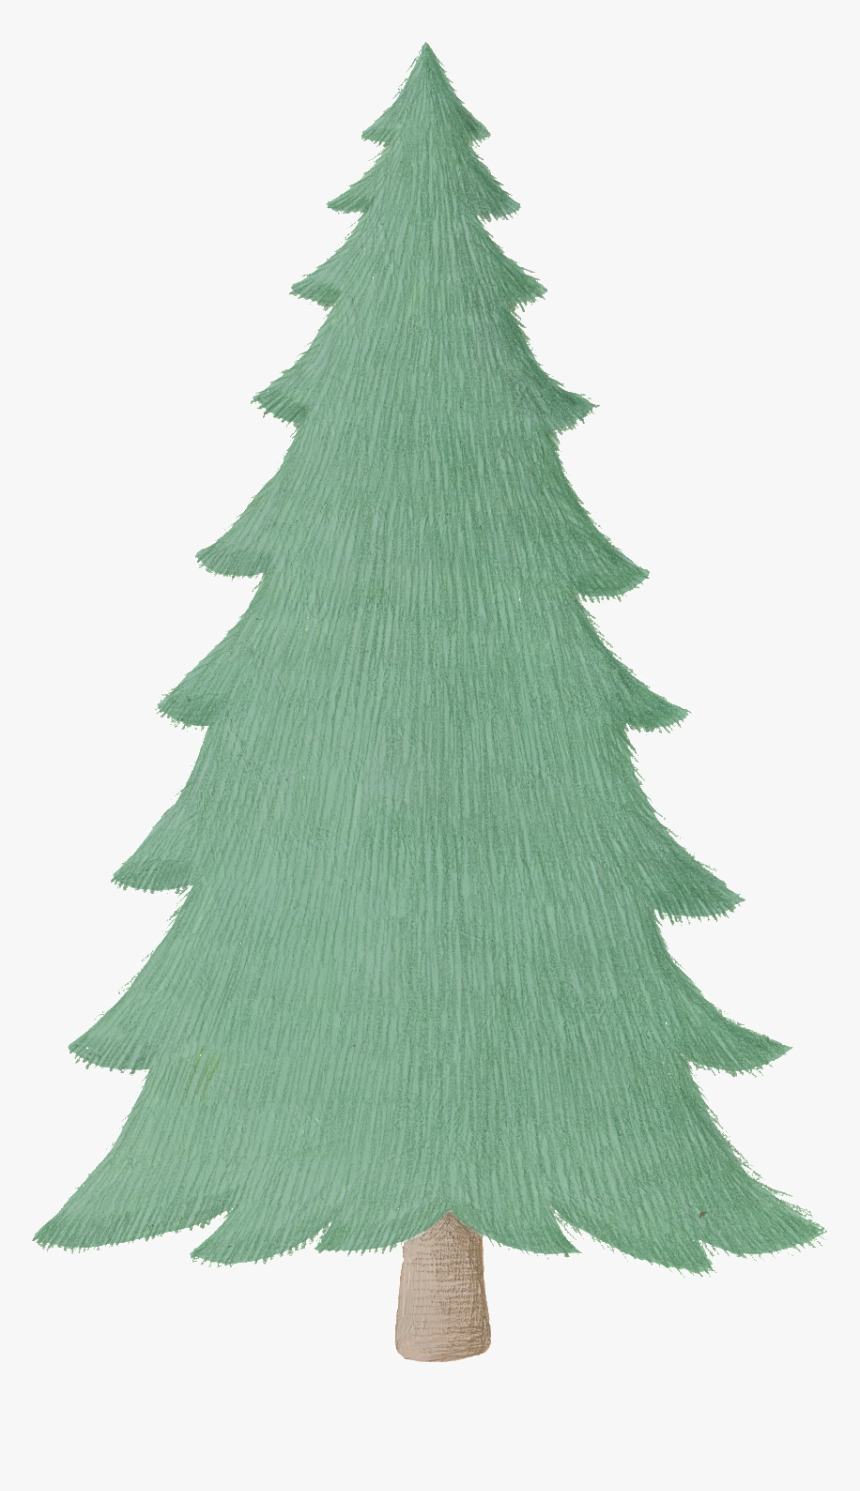 Cartoon Pine Tree Png Images - Cartoon Pine Tree Png, Transparent Png, Free Download